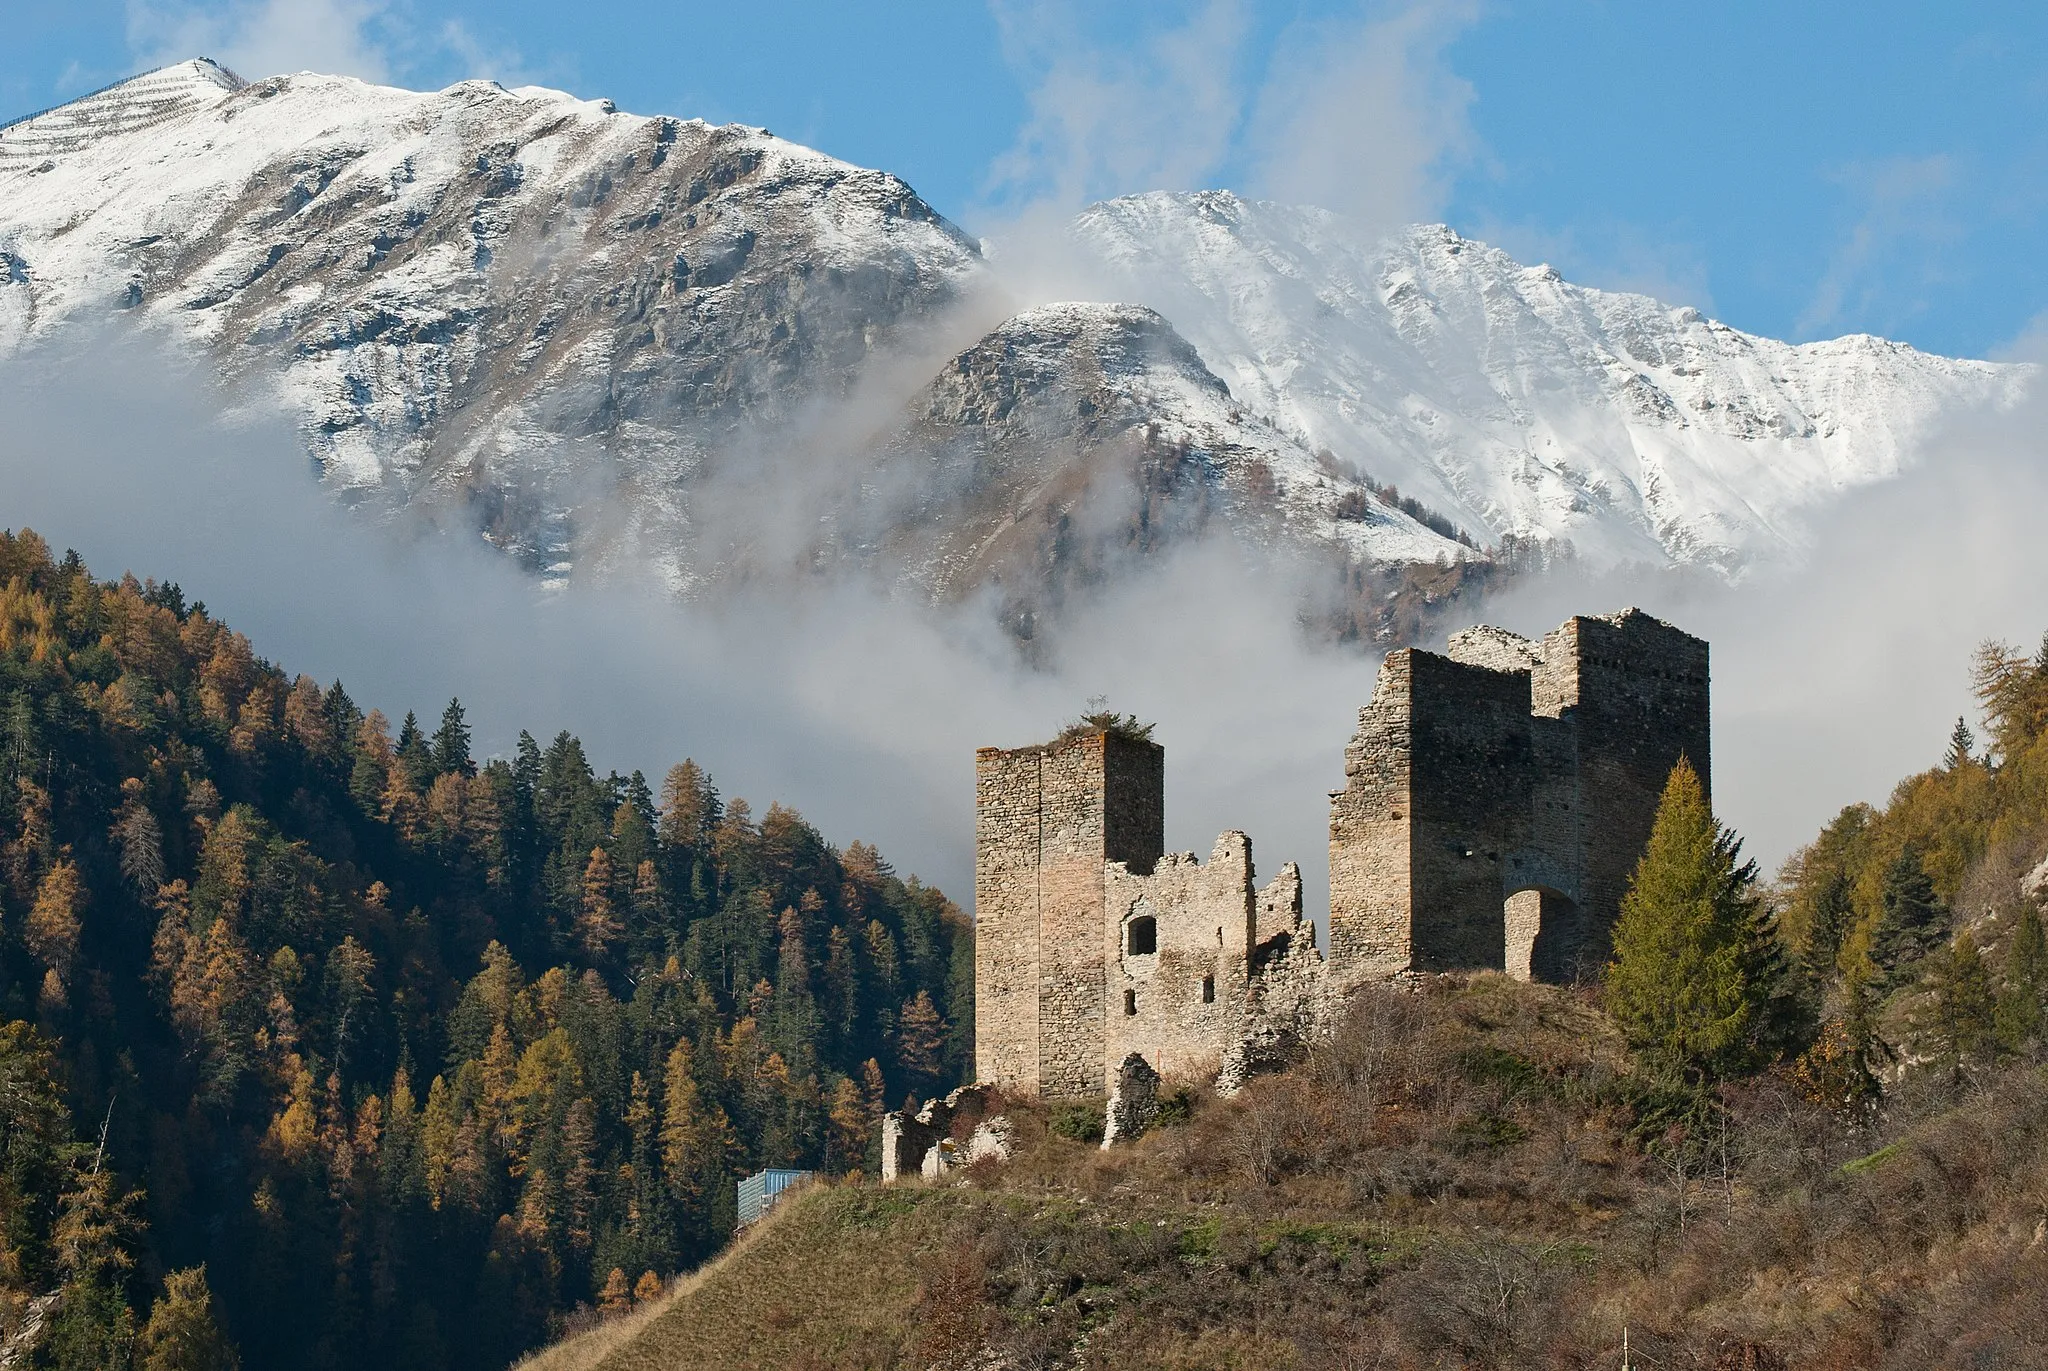 Photo showing: Tschanüff castle, in the background parts of the Piz Spadla mountain, in Switzerland.